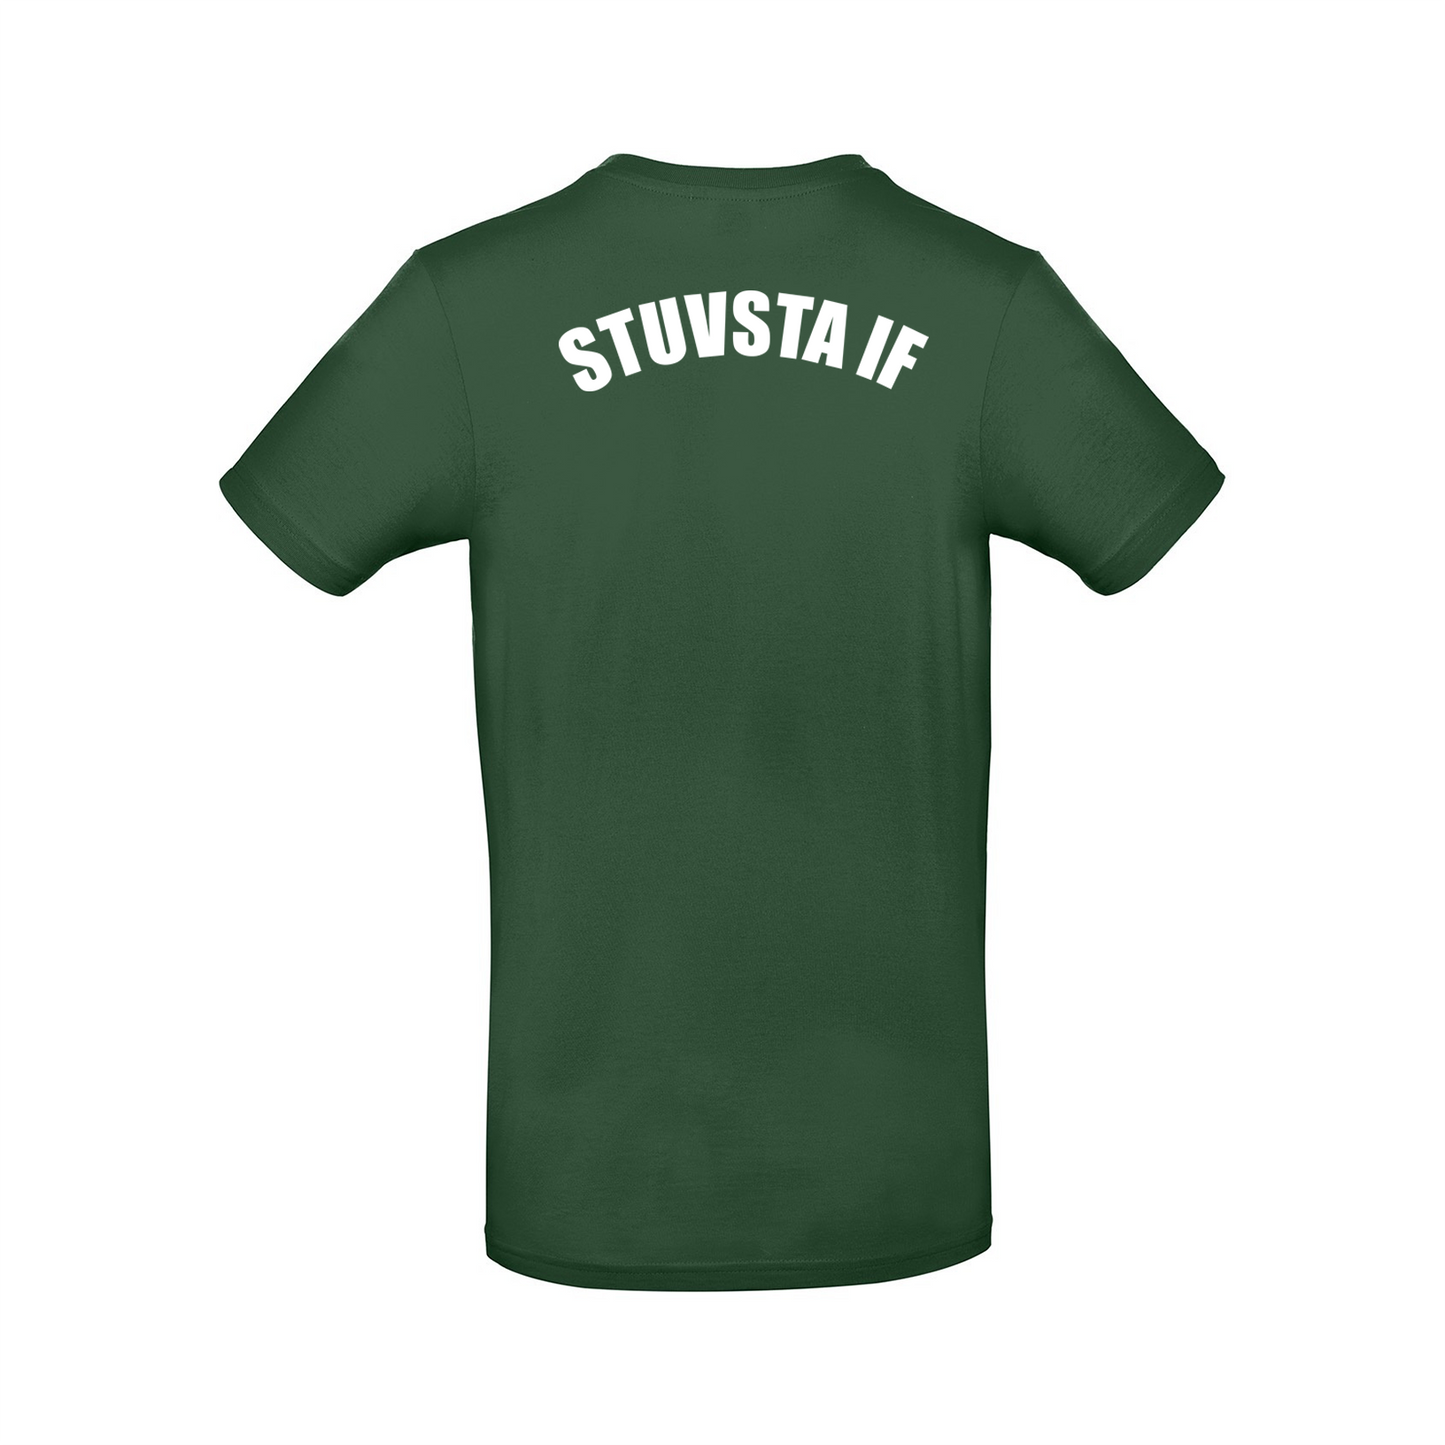 Stuvsta Club T-shirt